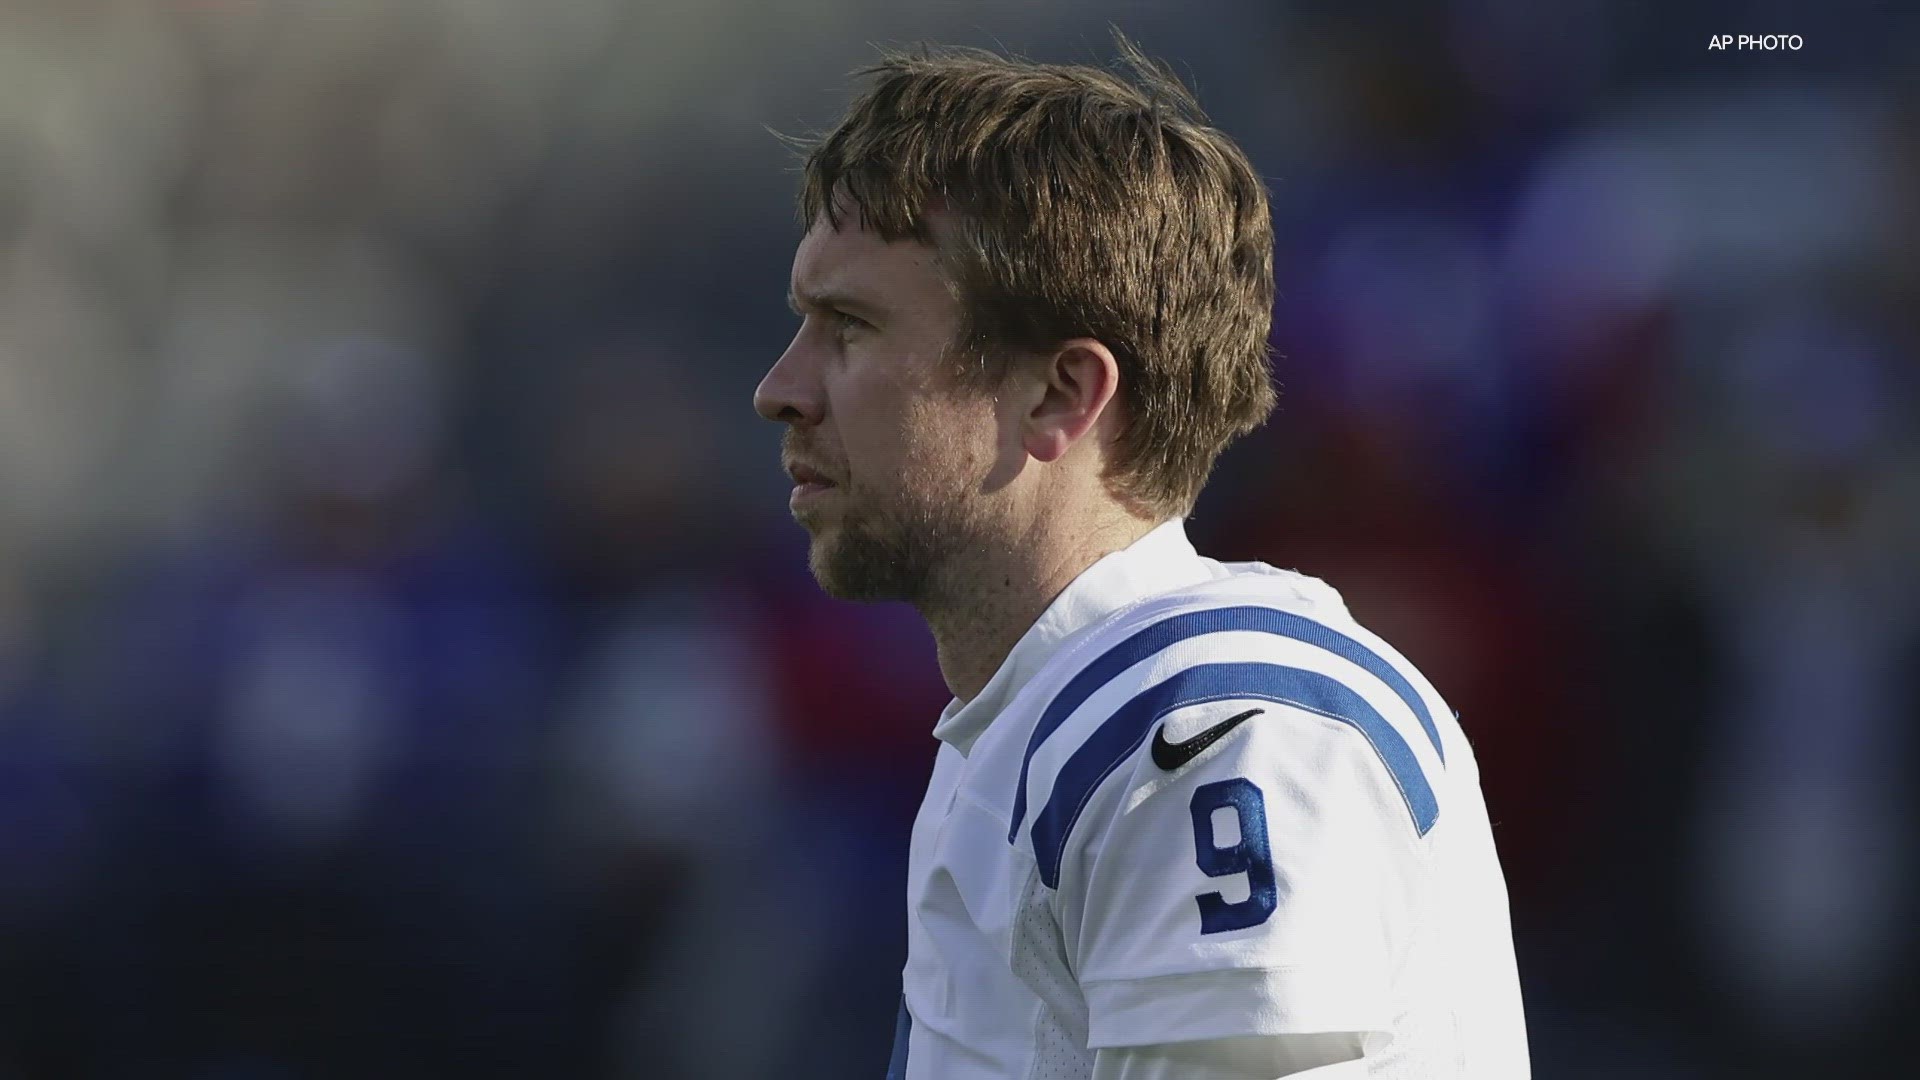 Colts release quarterback Nick Foles